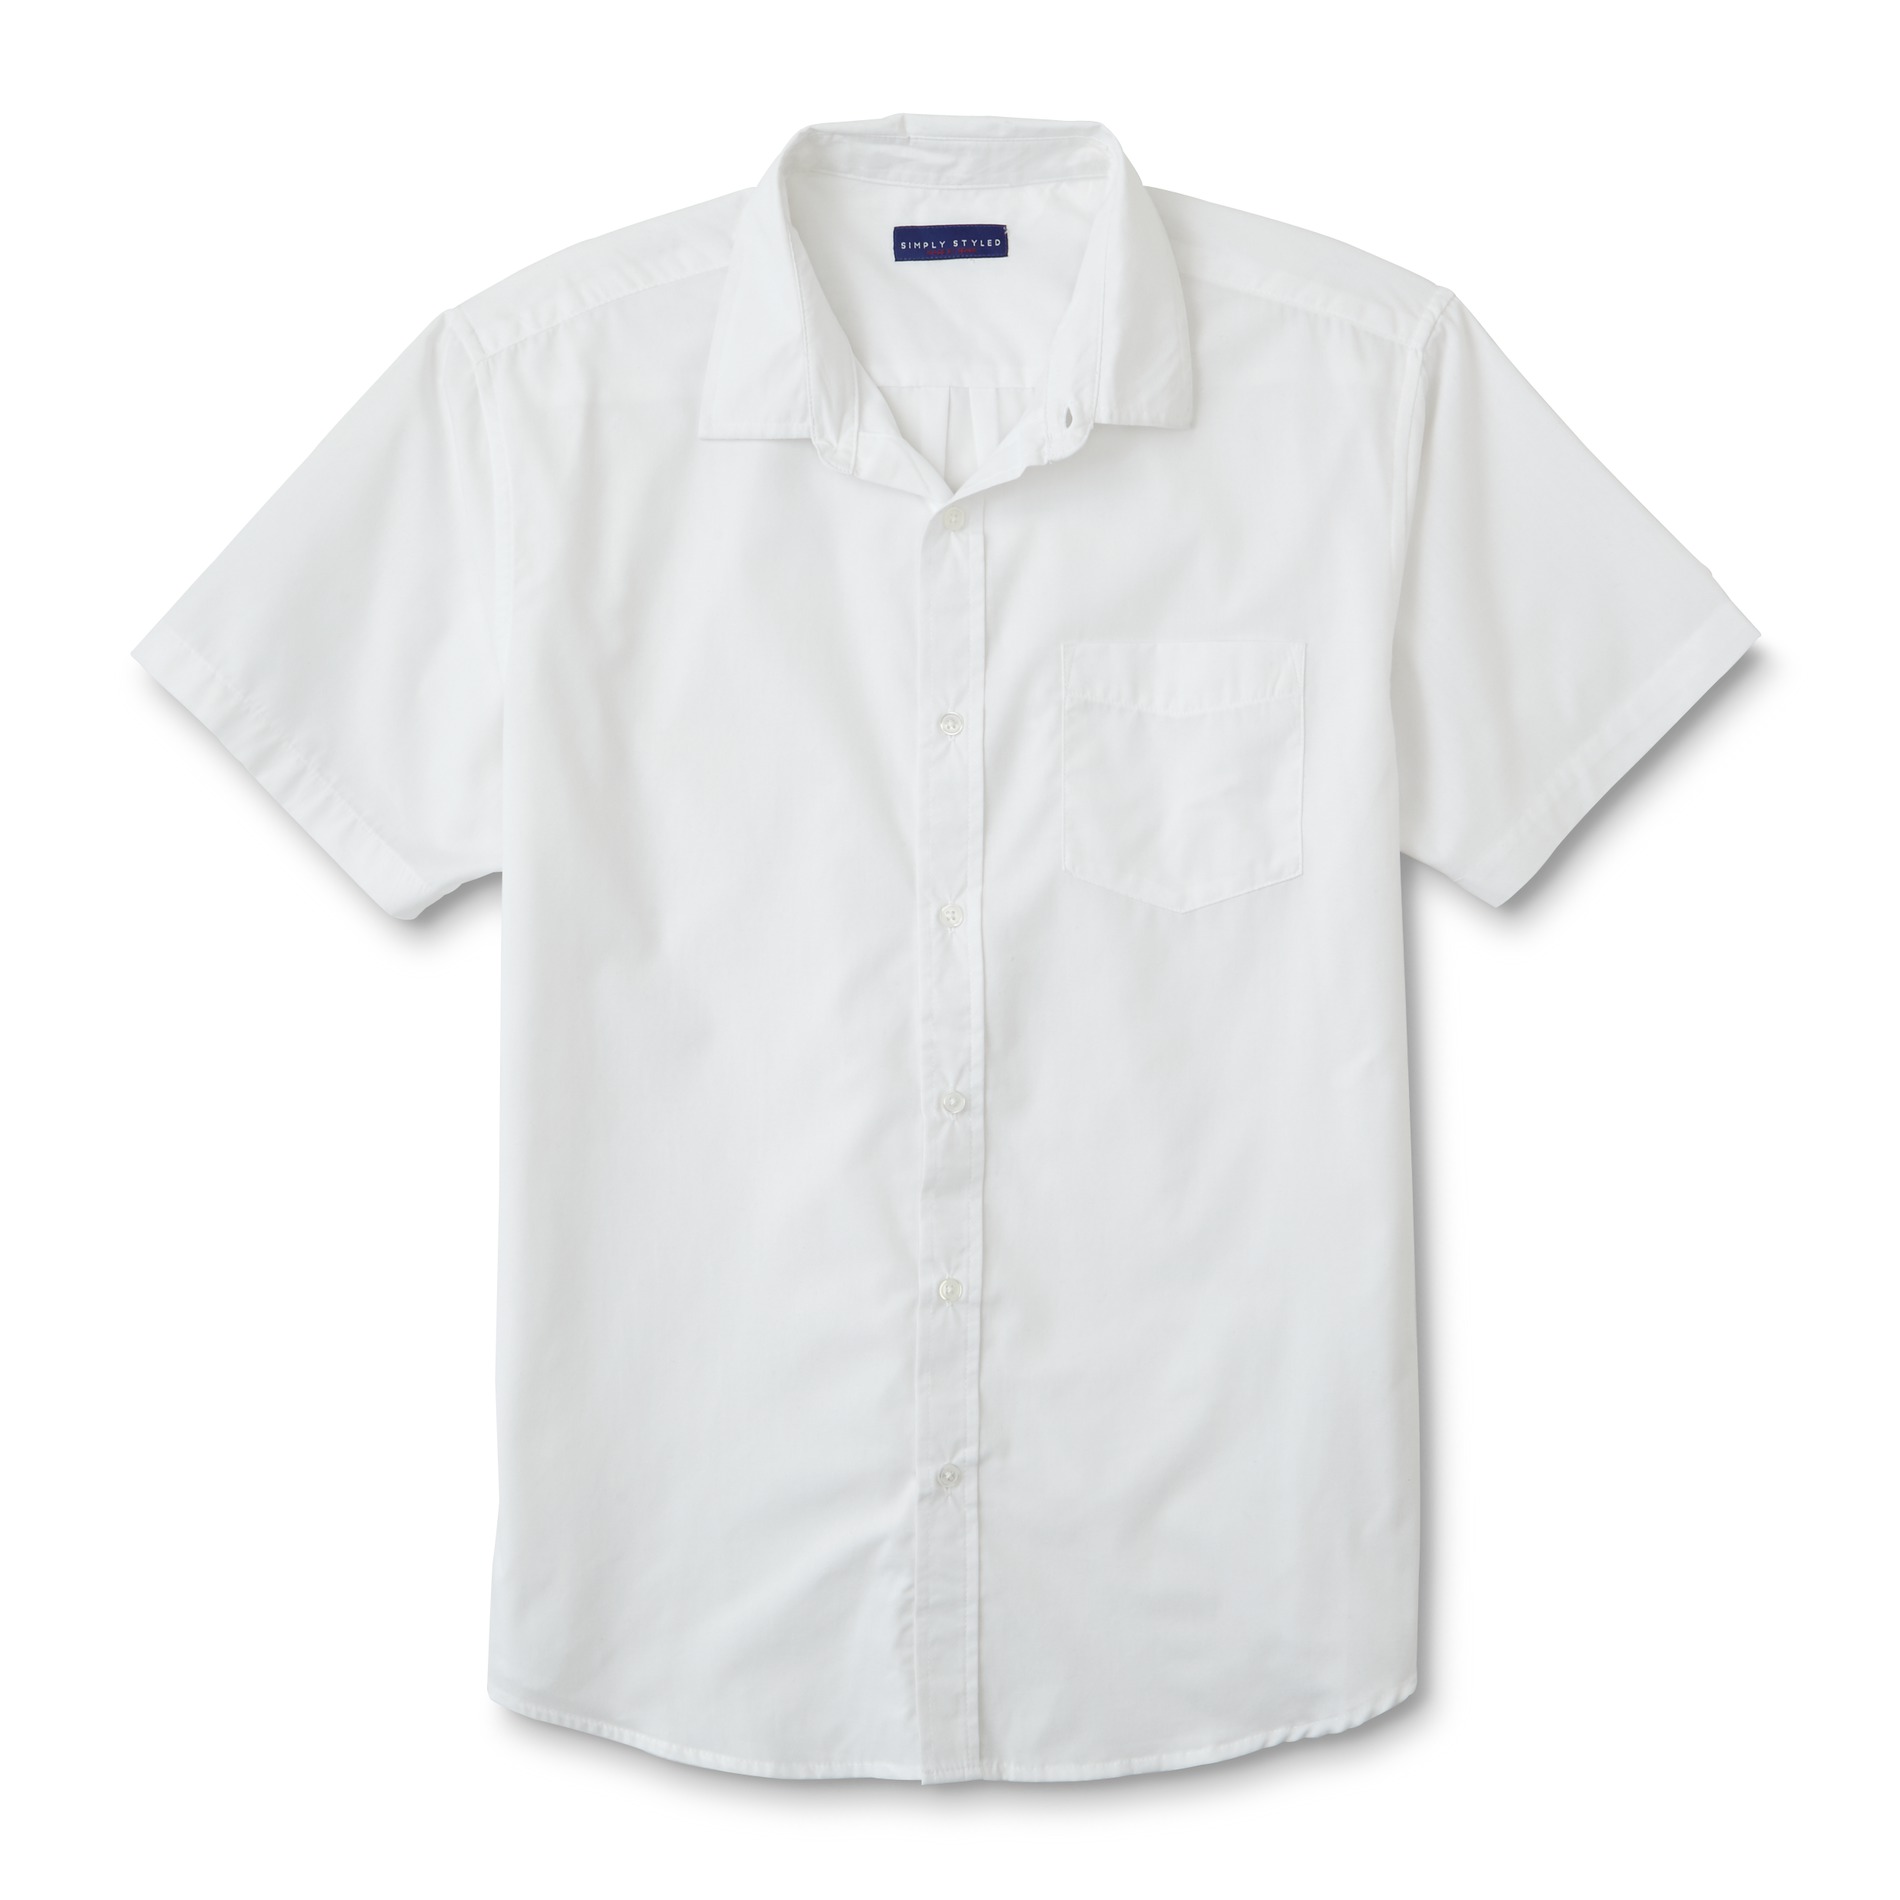 Simply Styled Men's Short-Sleeve Shirt